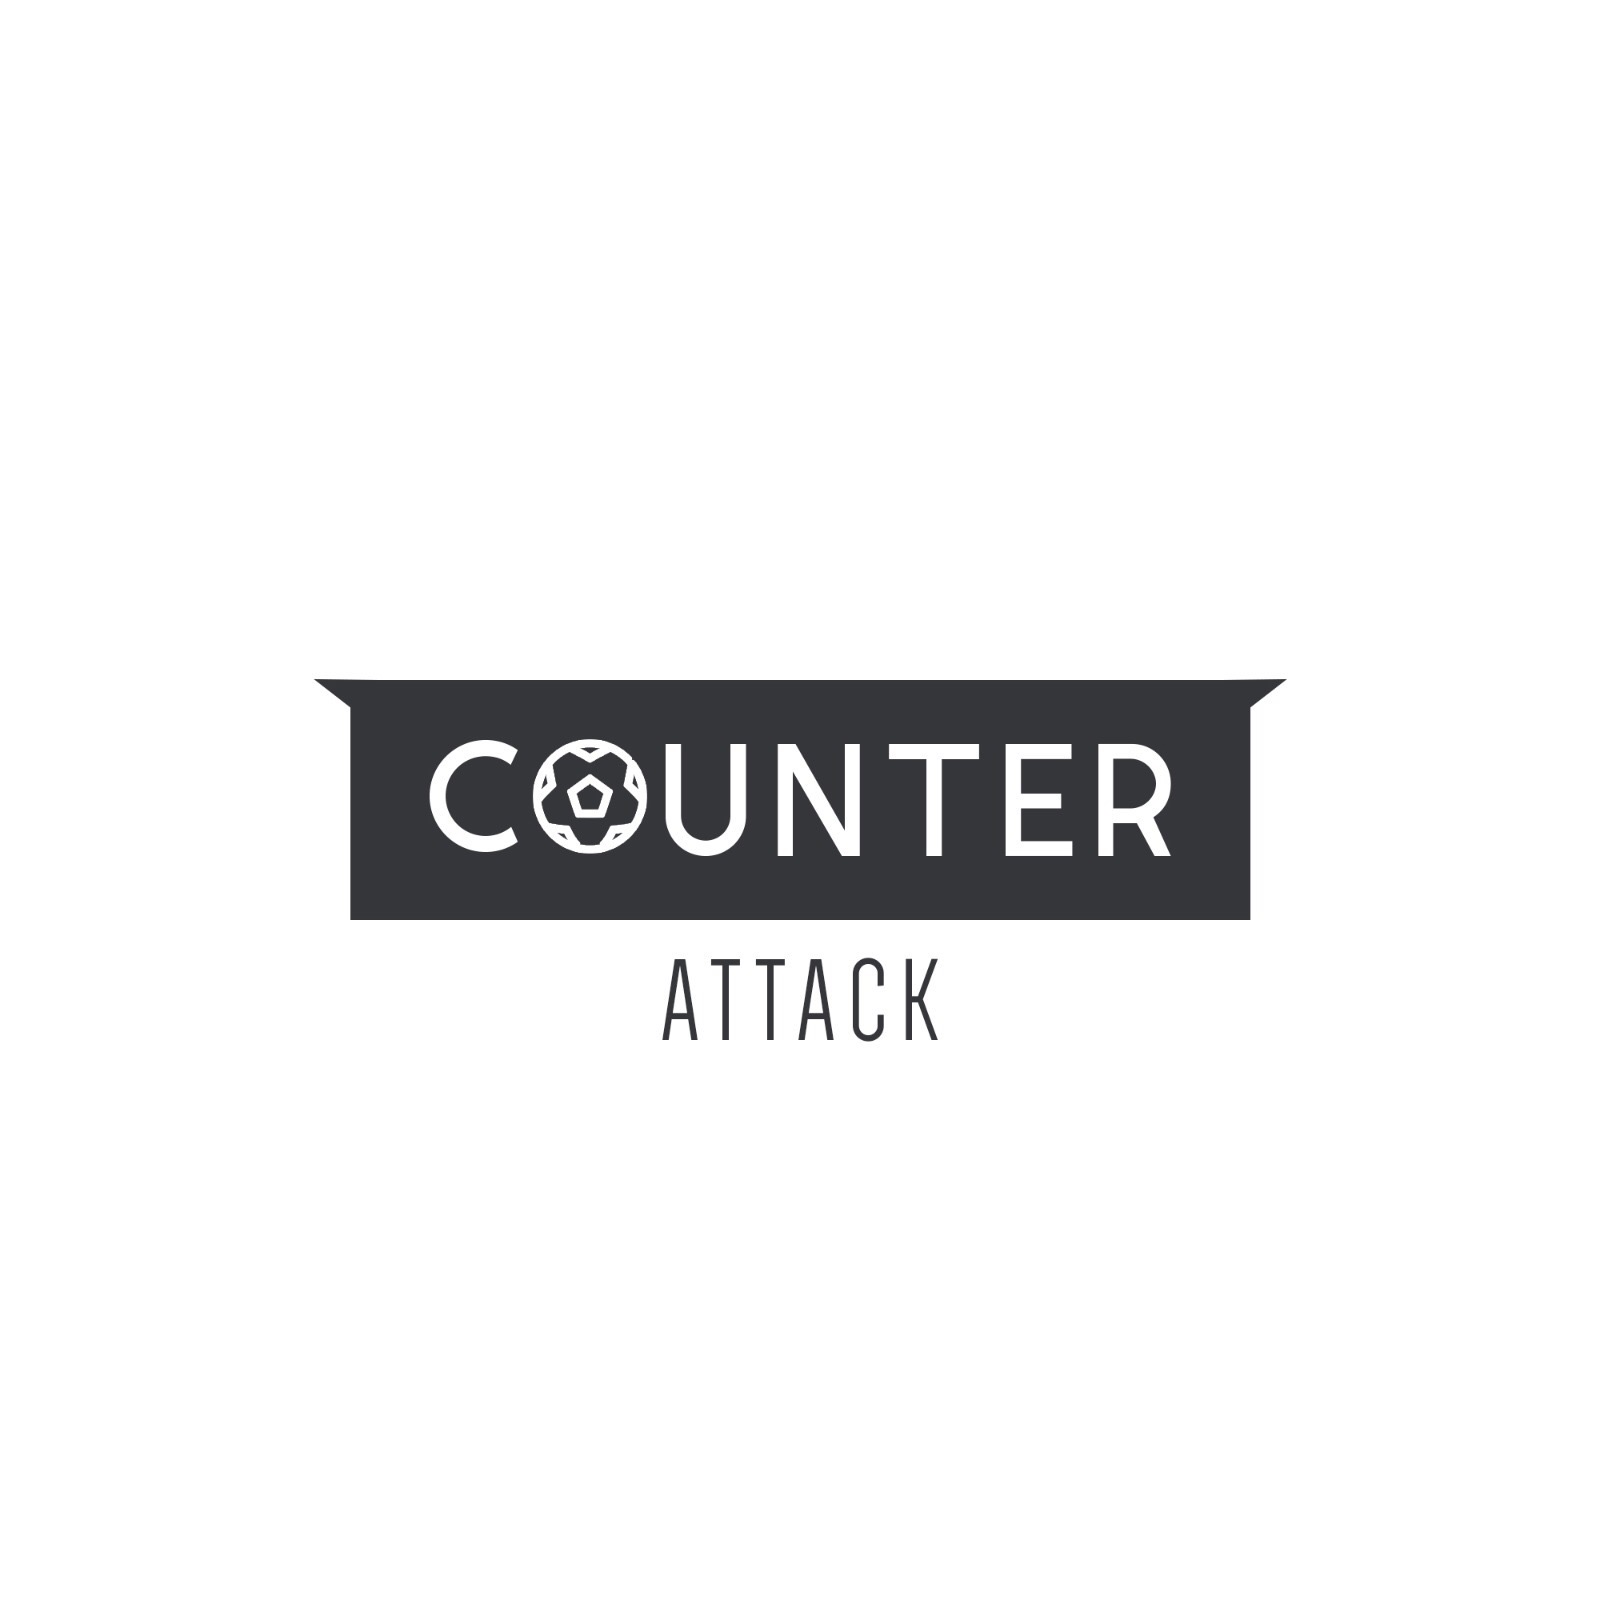 Counter Attack - Episode 172 - Chelsea Pain For Lukaku